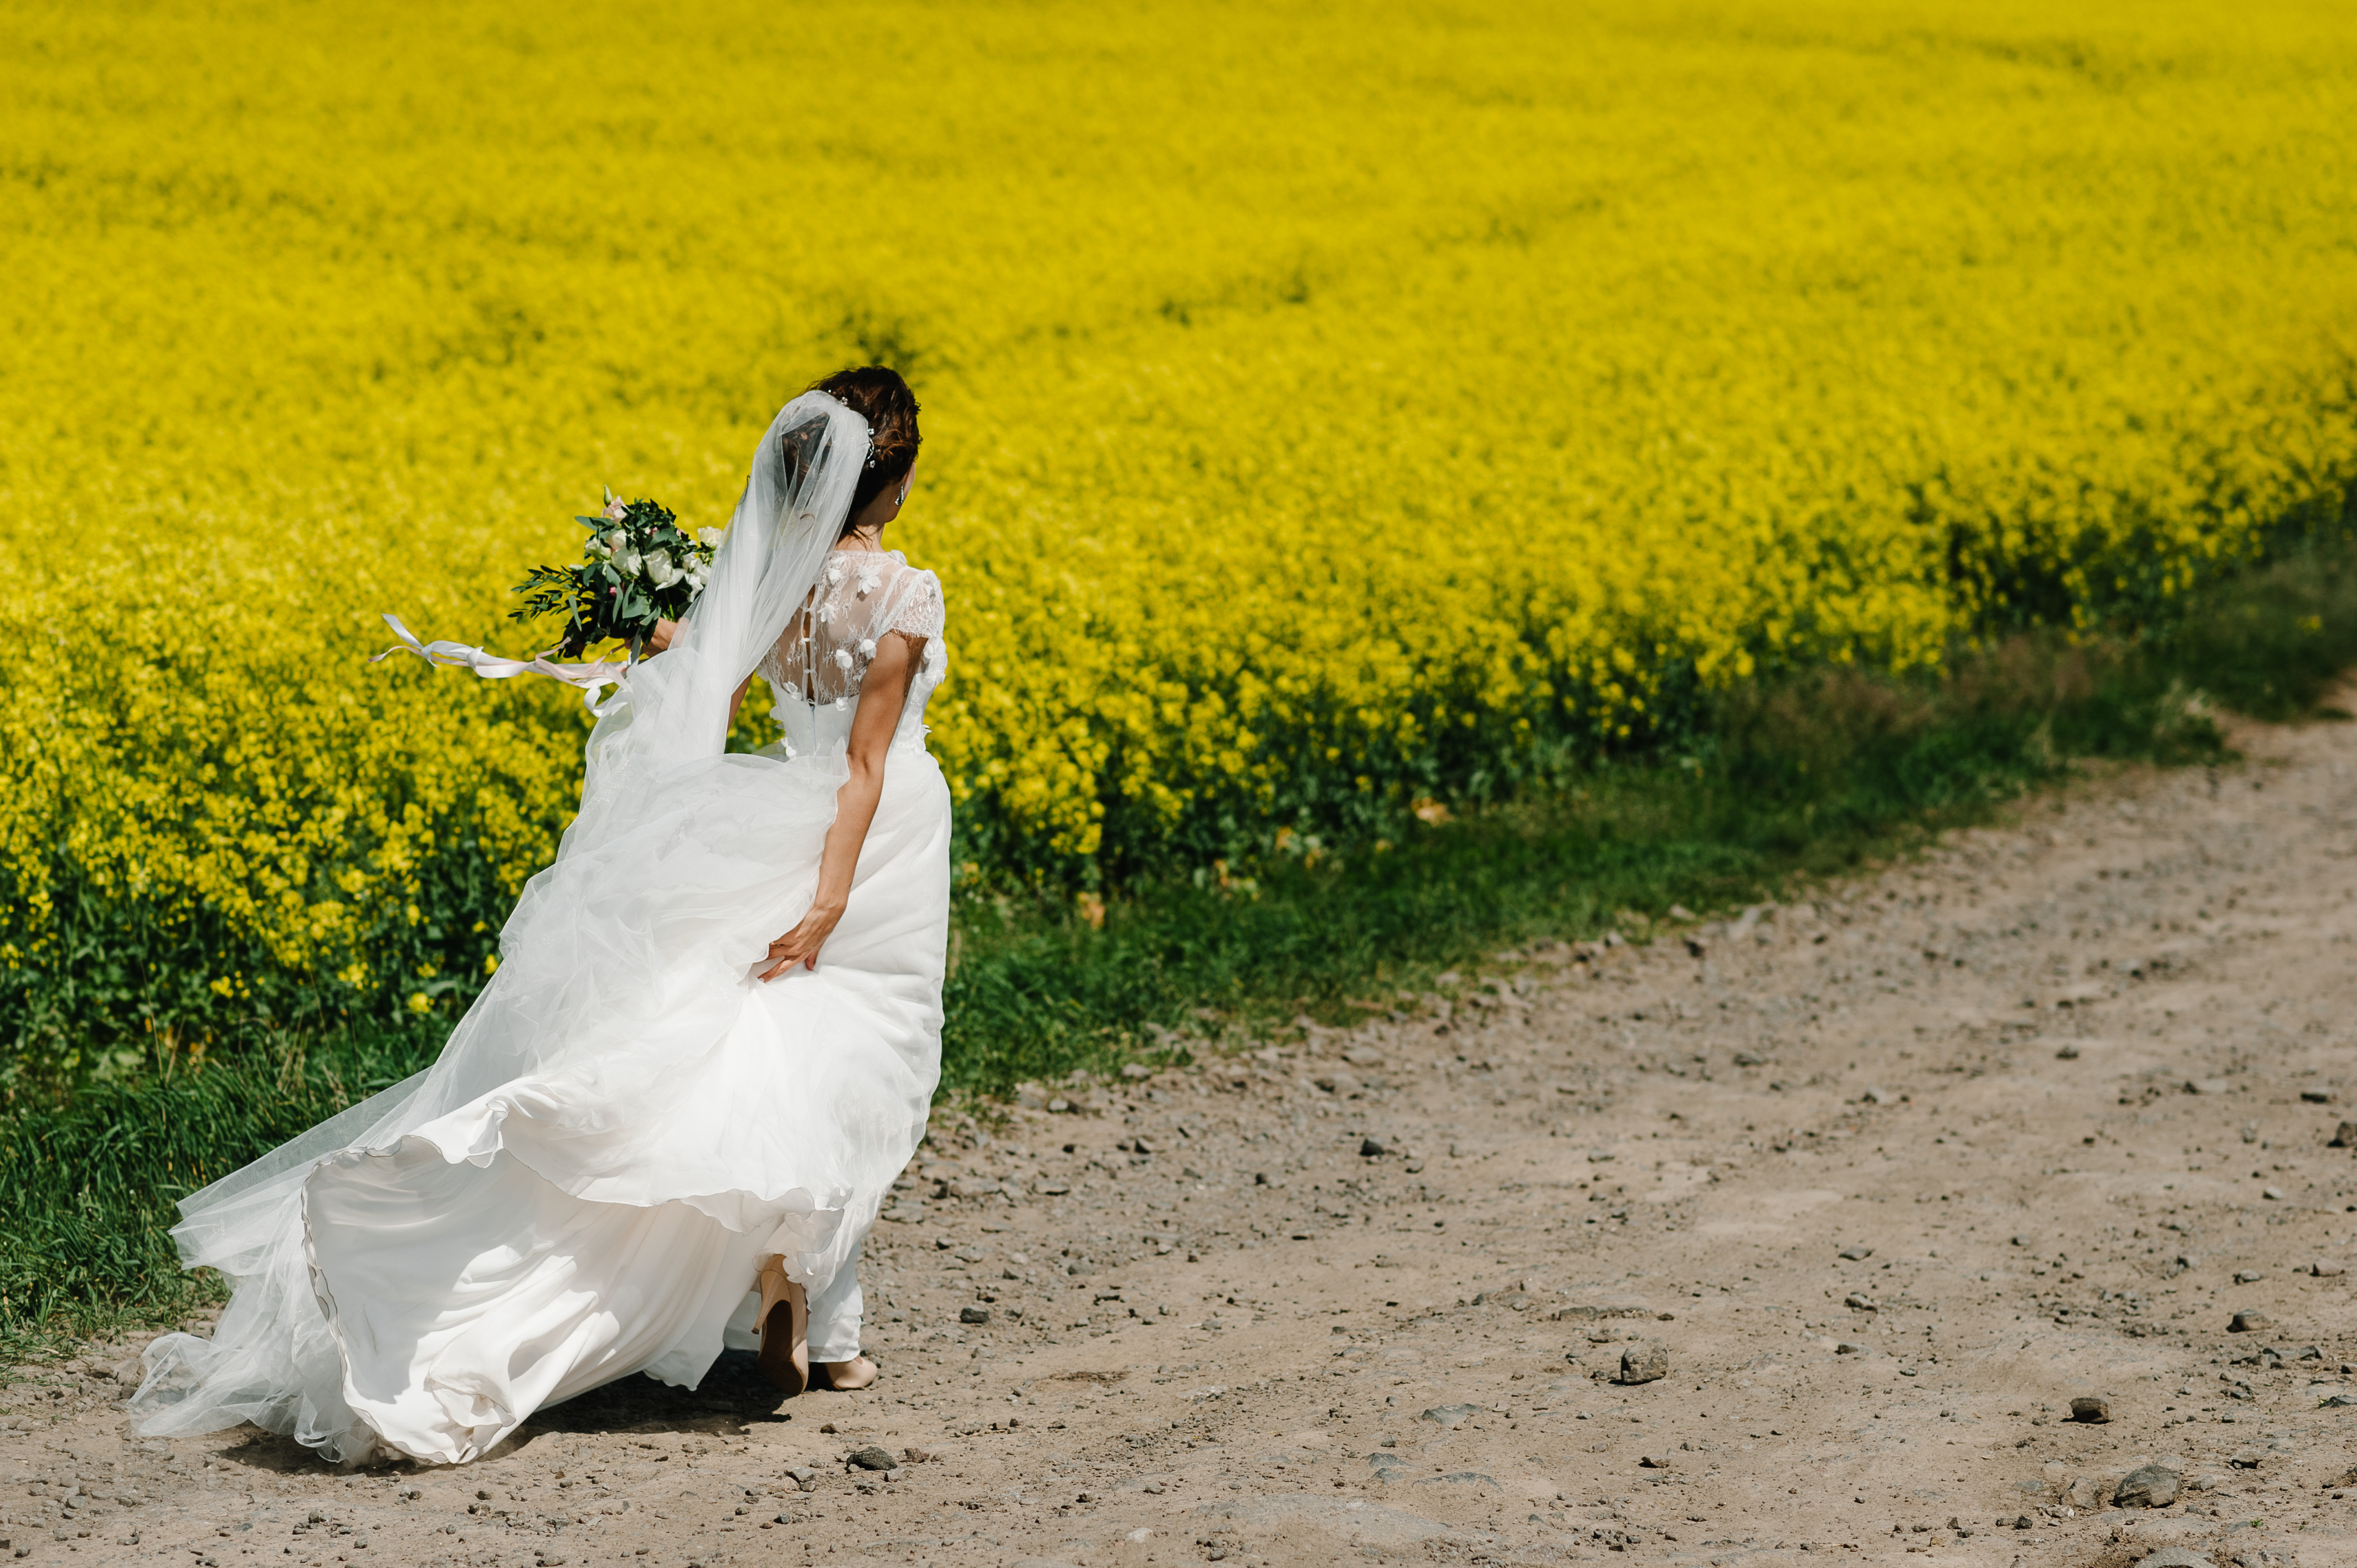 Bride | Source: Shutterstock